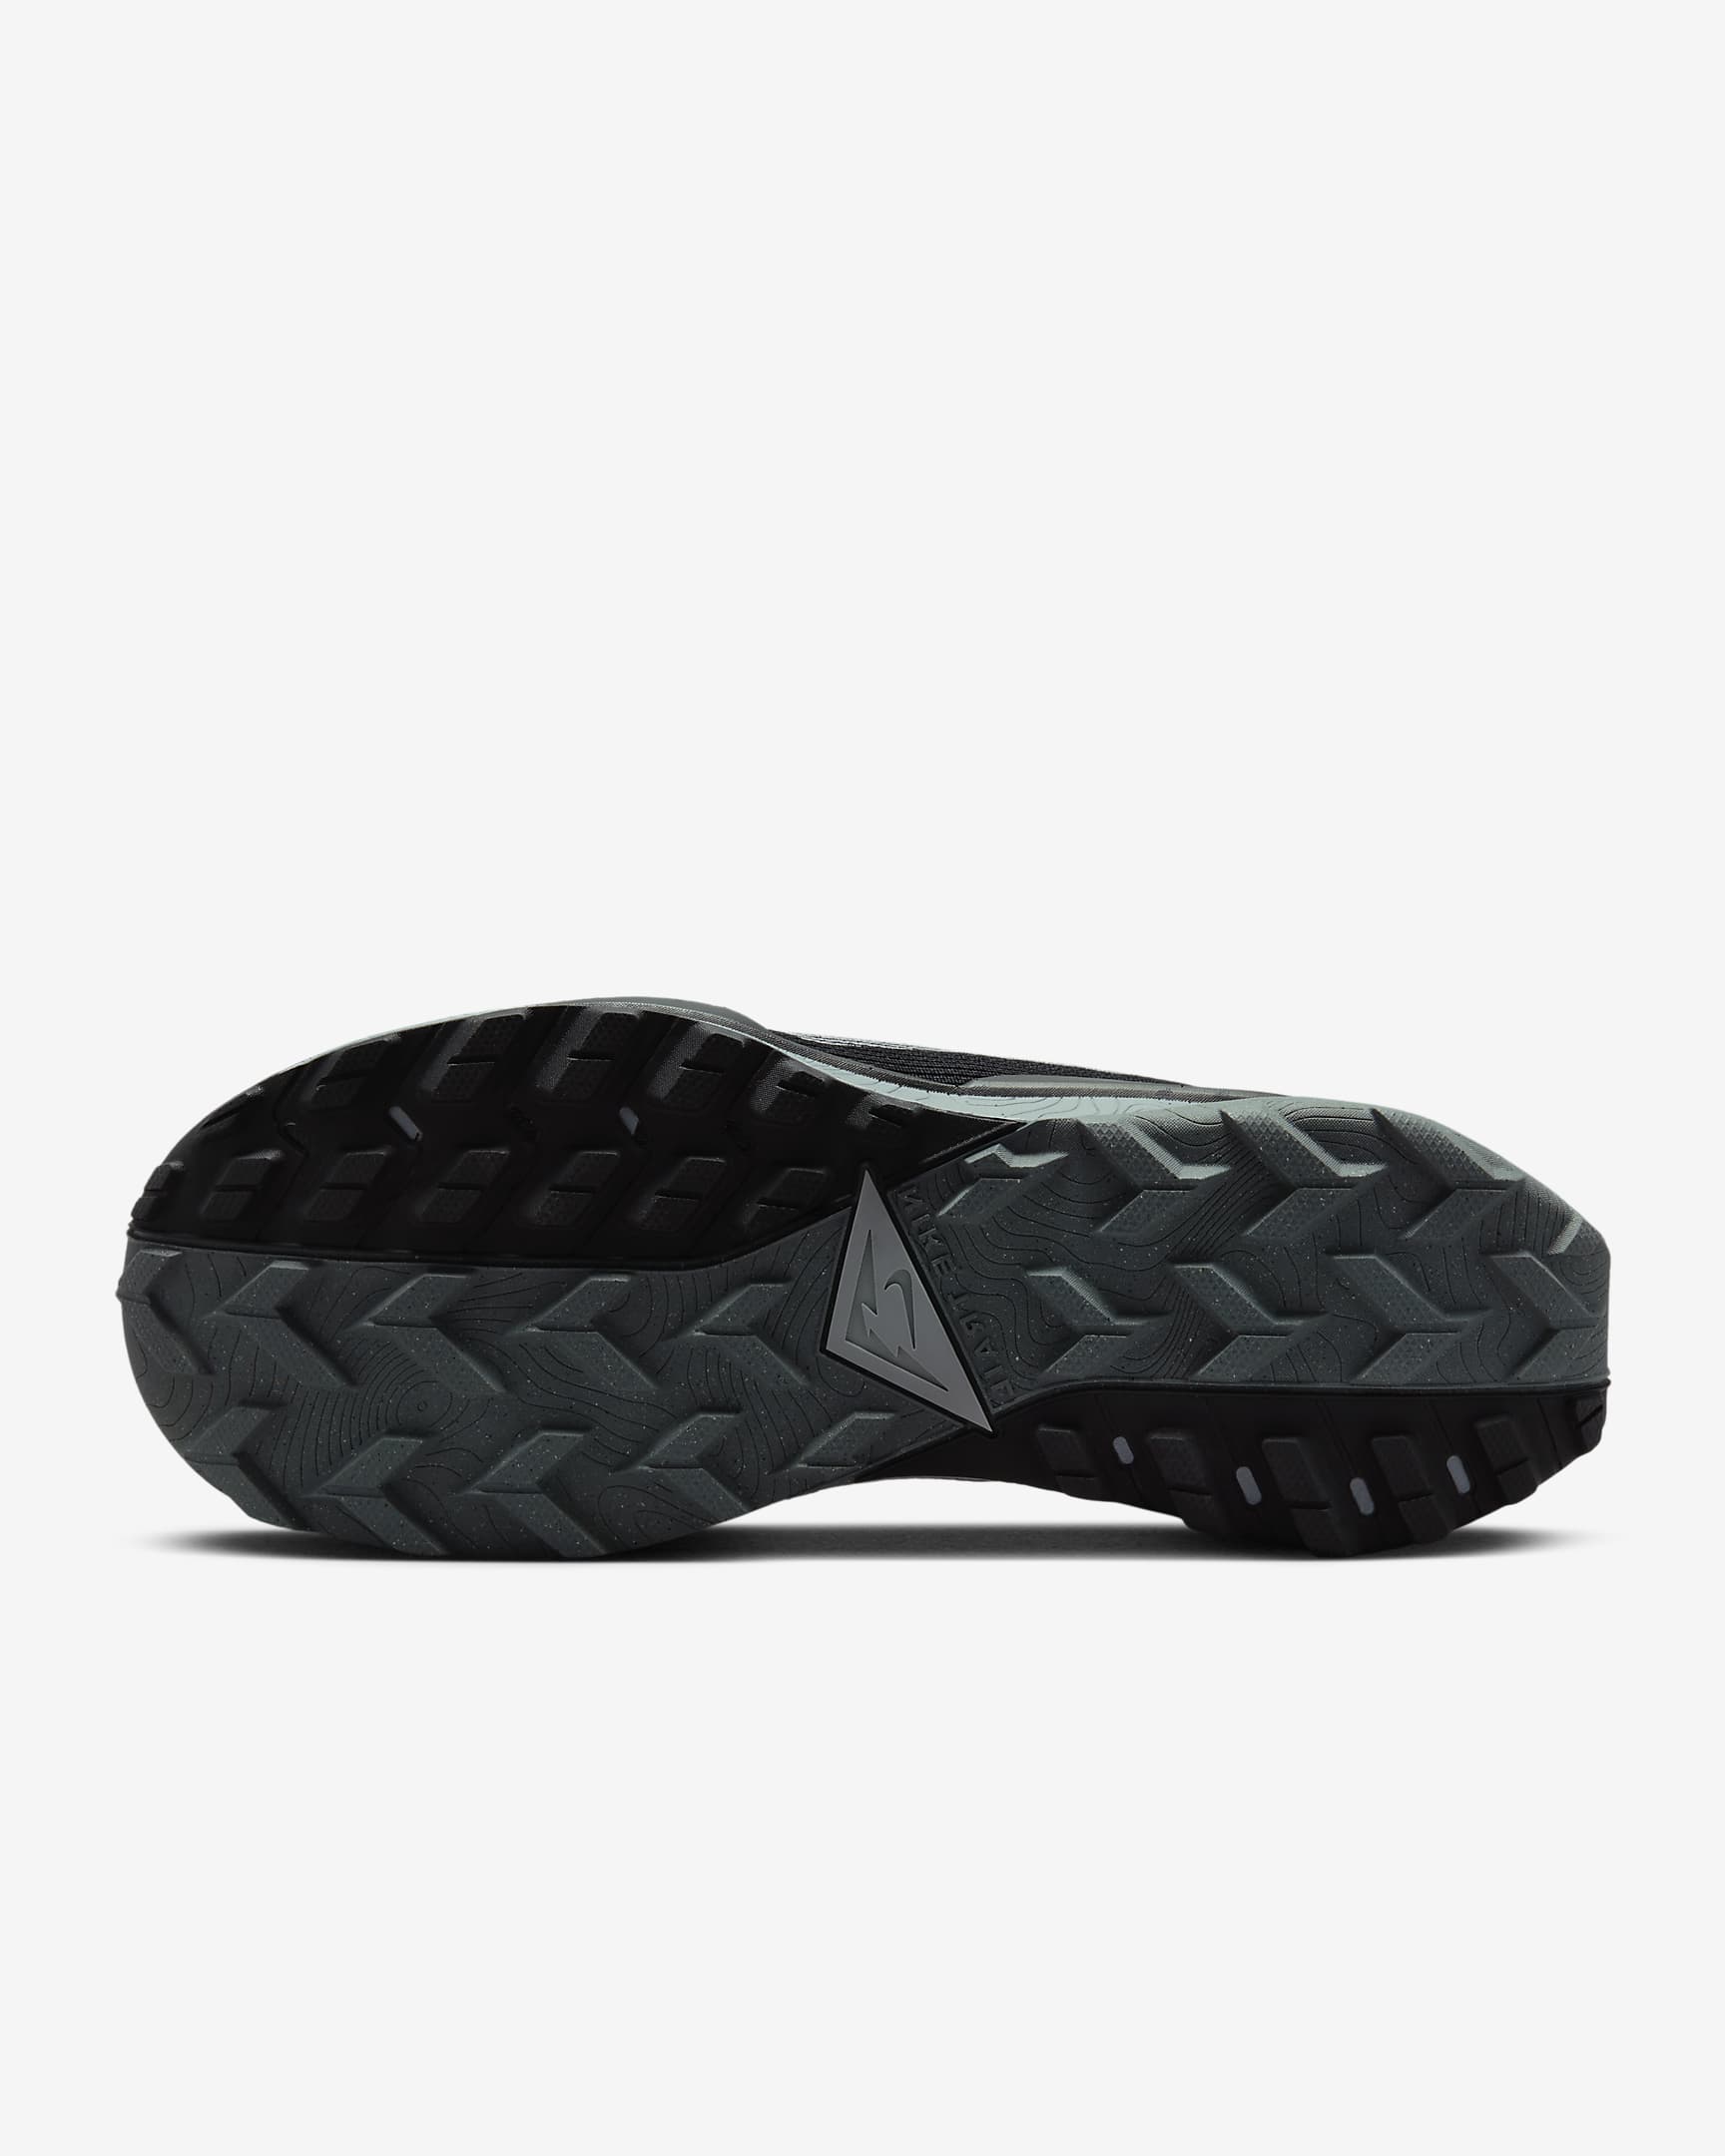 Nike Wildhorse 8 Men's Trail Running Shoes - Black/Cool Grey/White/Wolf Grey